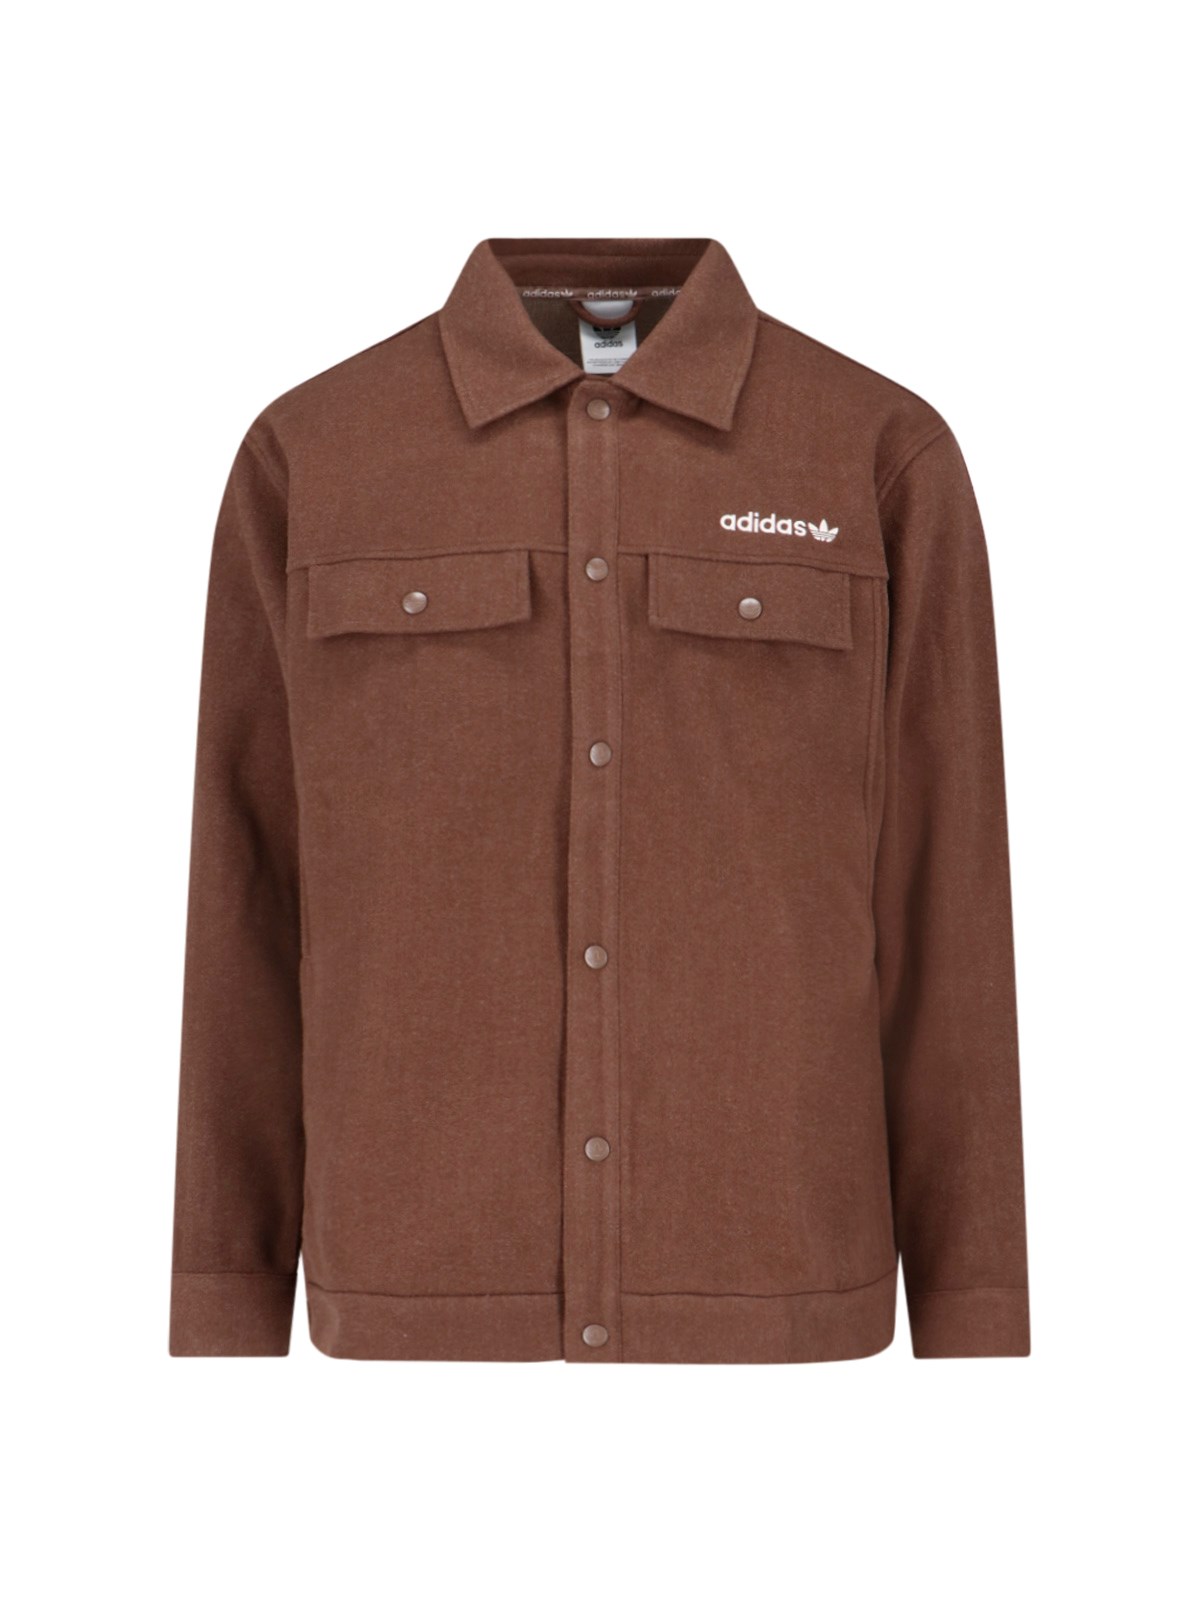 Adidas Originals Logo Shirt Jacket In Brown